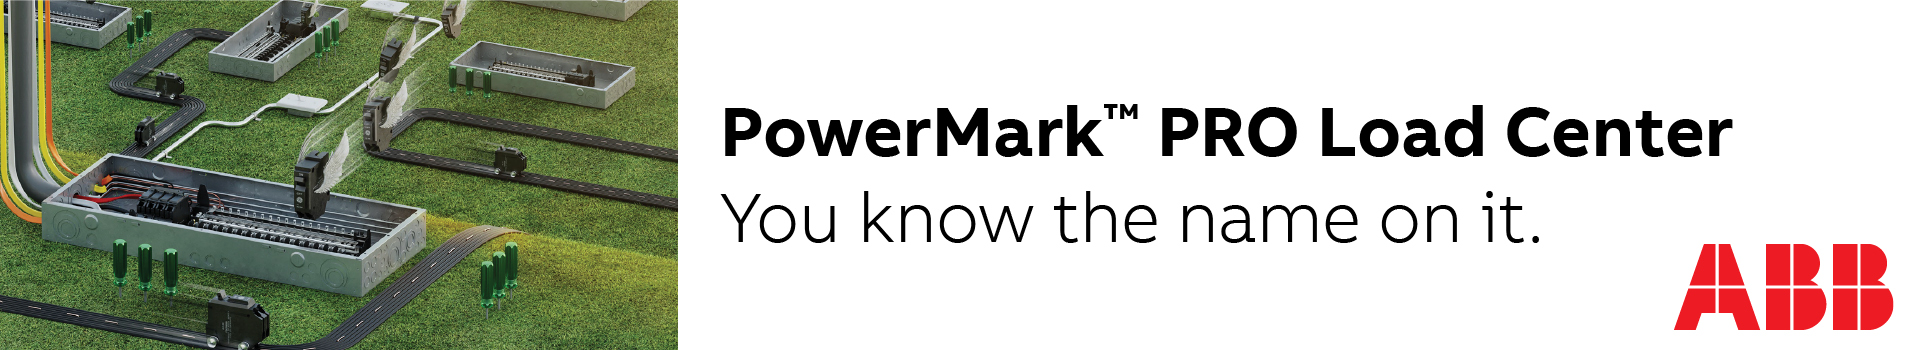 abb-powermark-pro-featured-banner